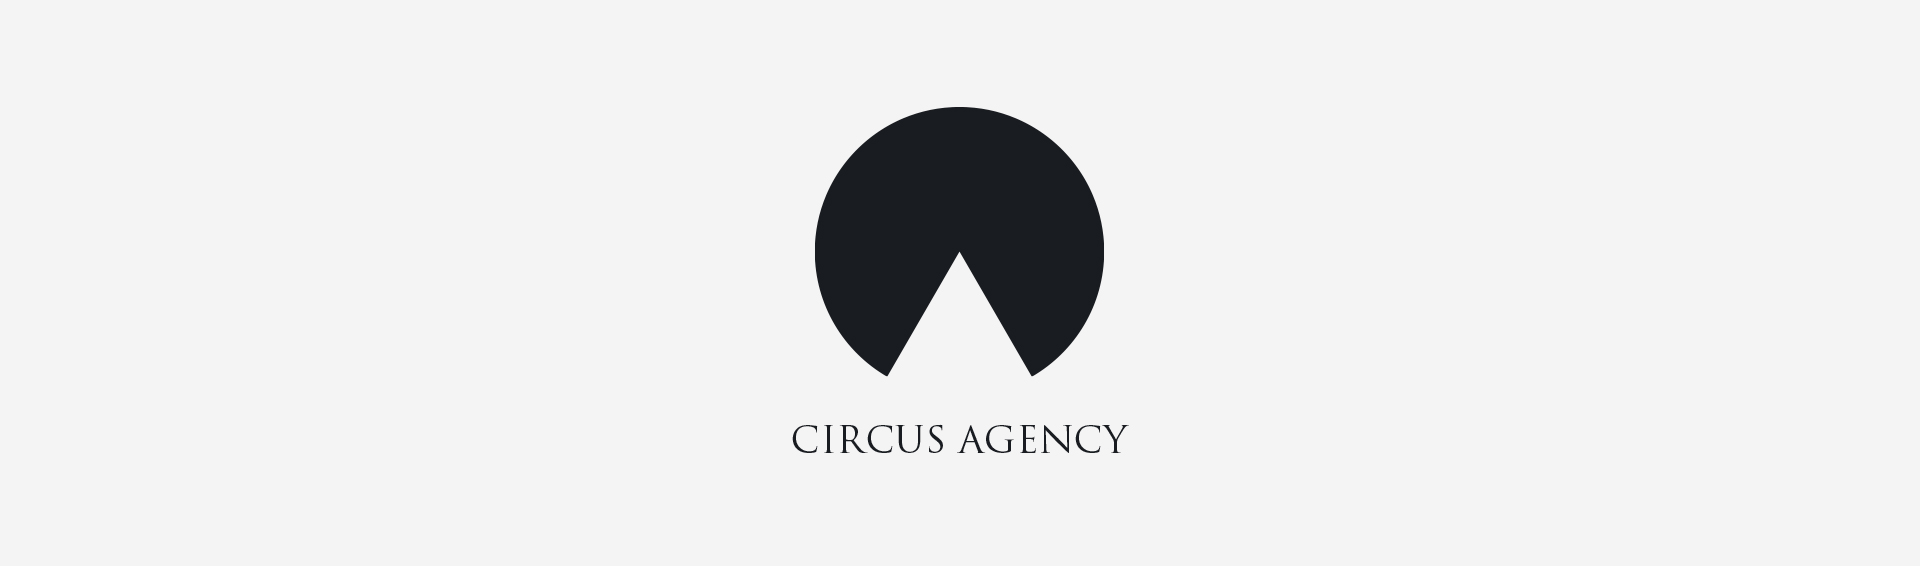 circus_logotype_identity_corporate